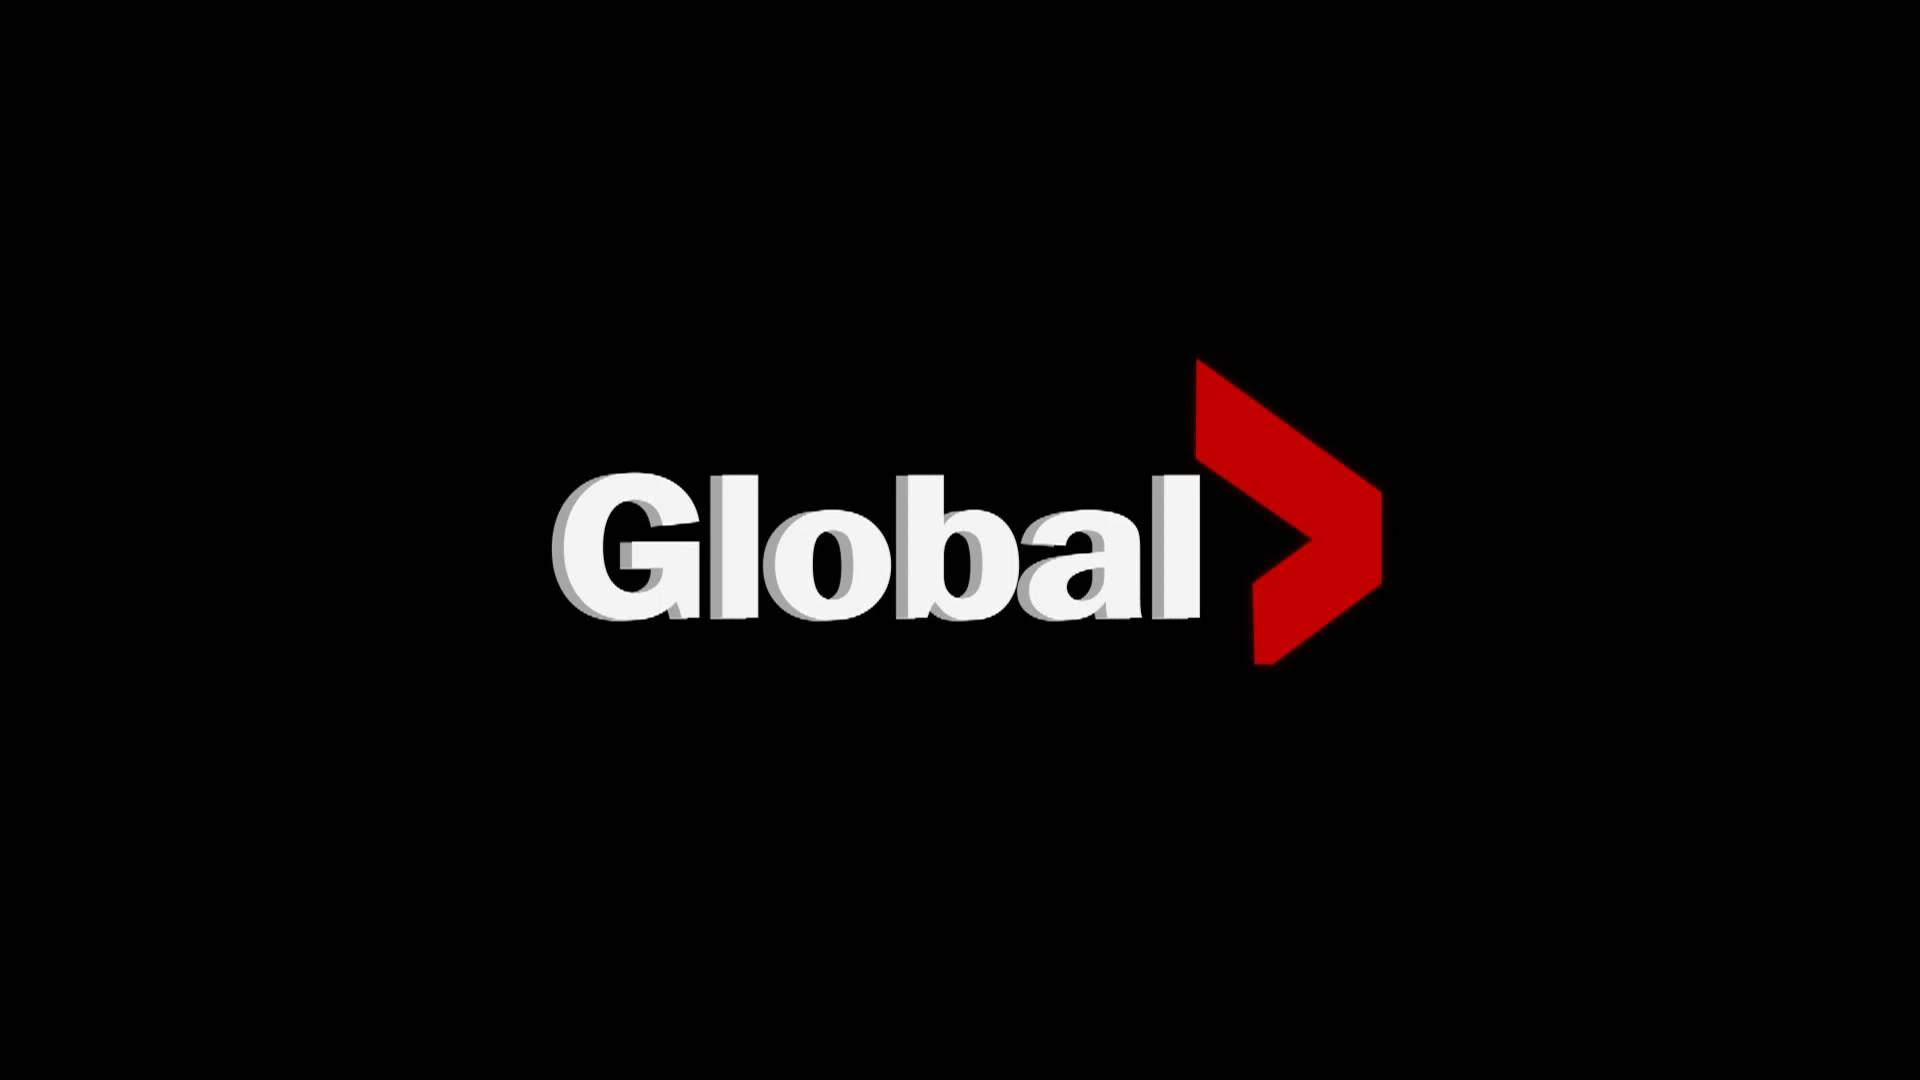 Global HD Logo - Global 2016-17 Schedule | Release Date TV